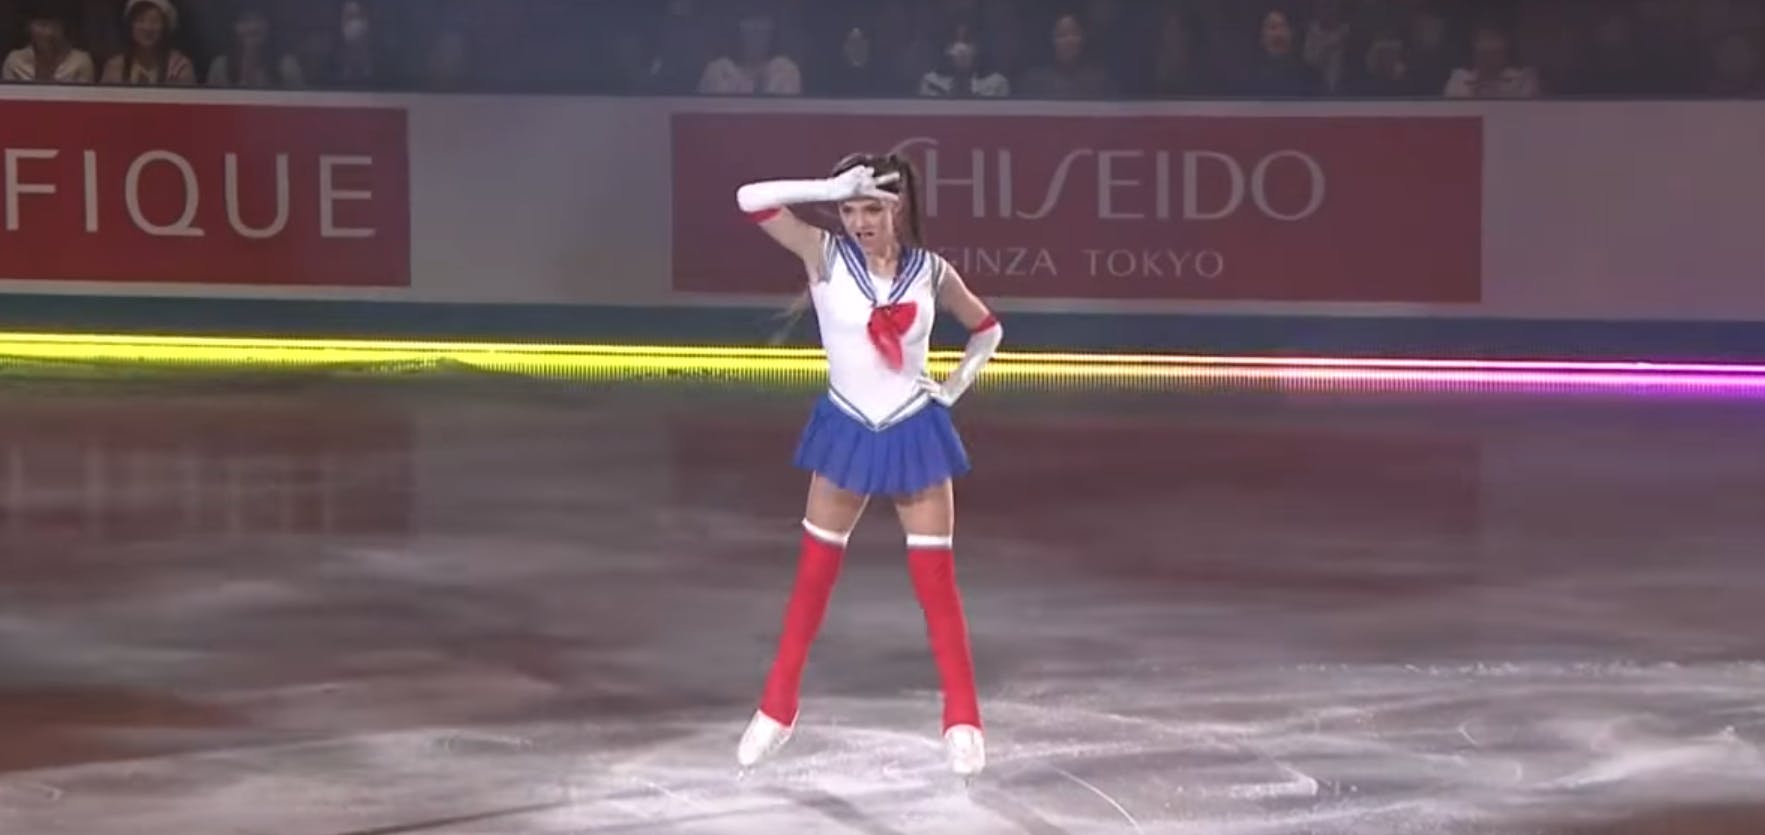 Adorable Sailor Moon figure skater does it again